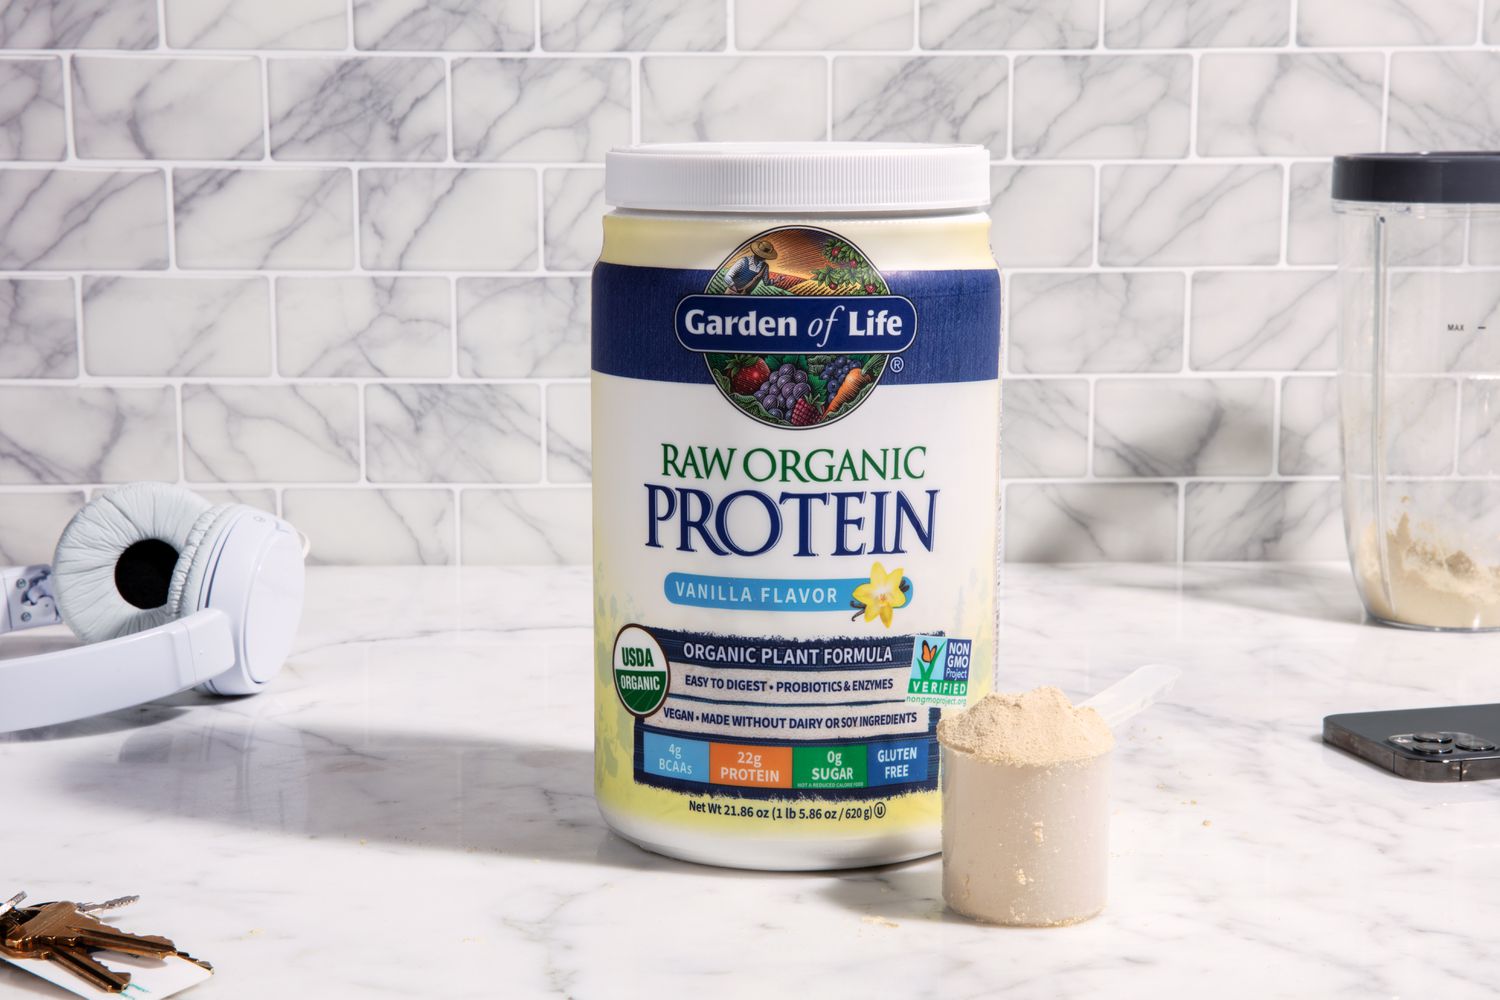 Garden of Life Raw Organic Vanilla Protein Powder displayed on a kitchen counter